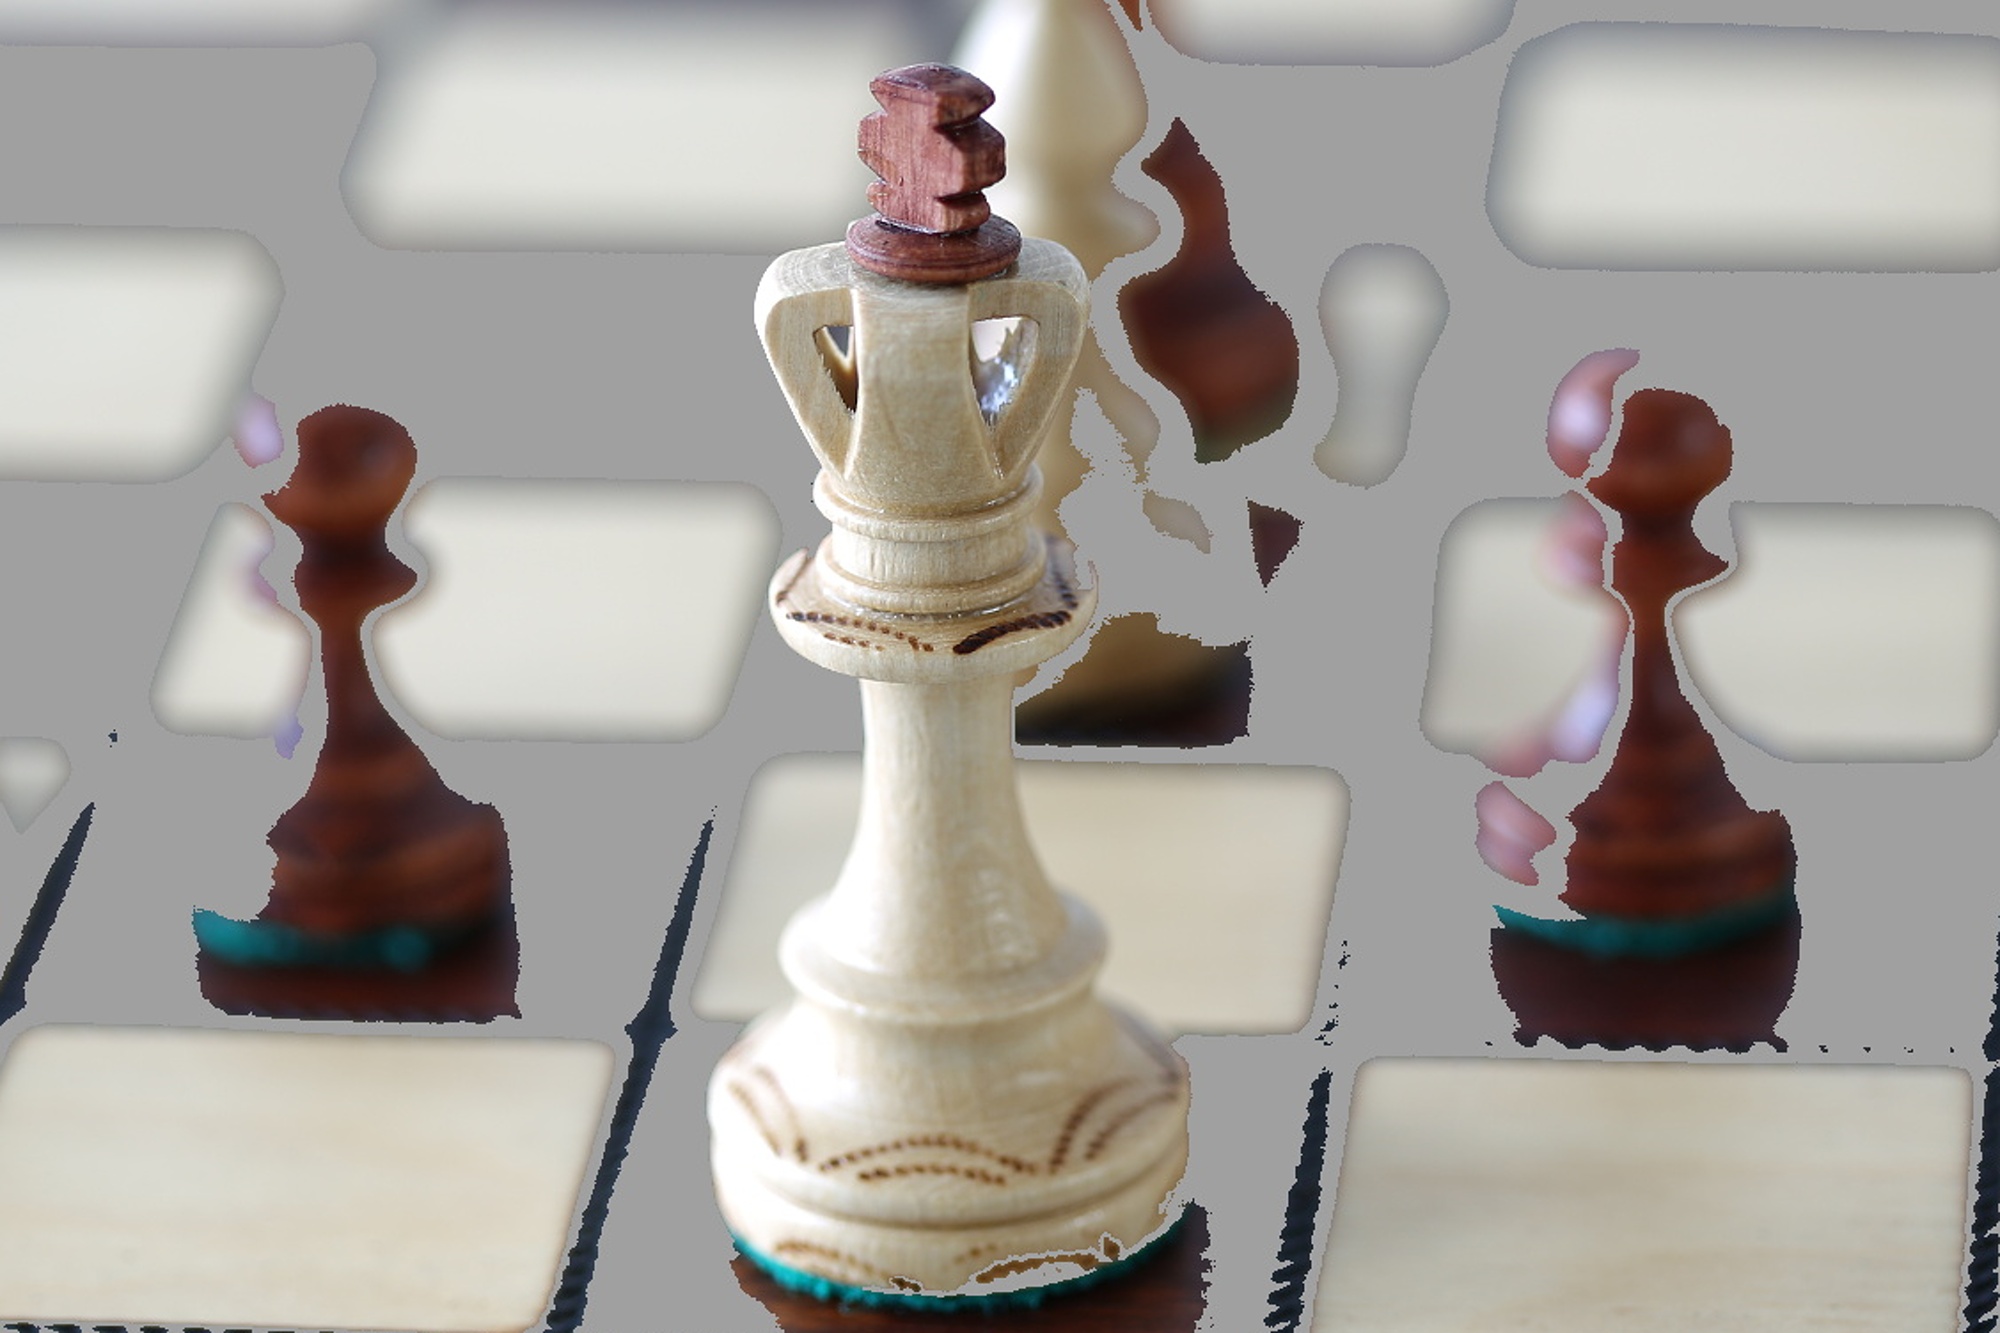 David L. šachy 8